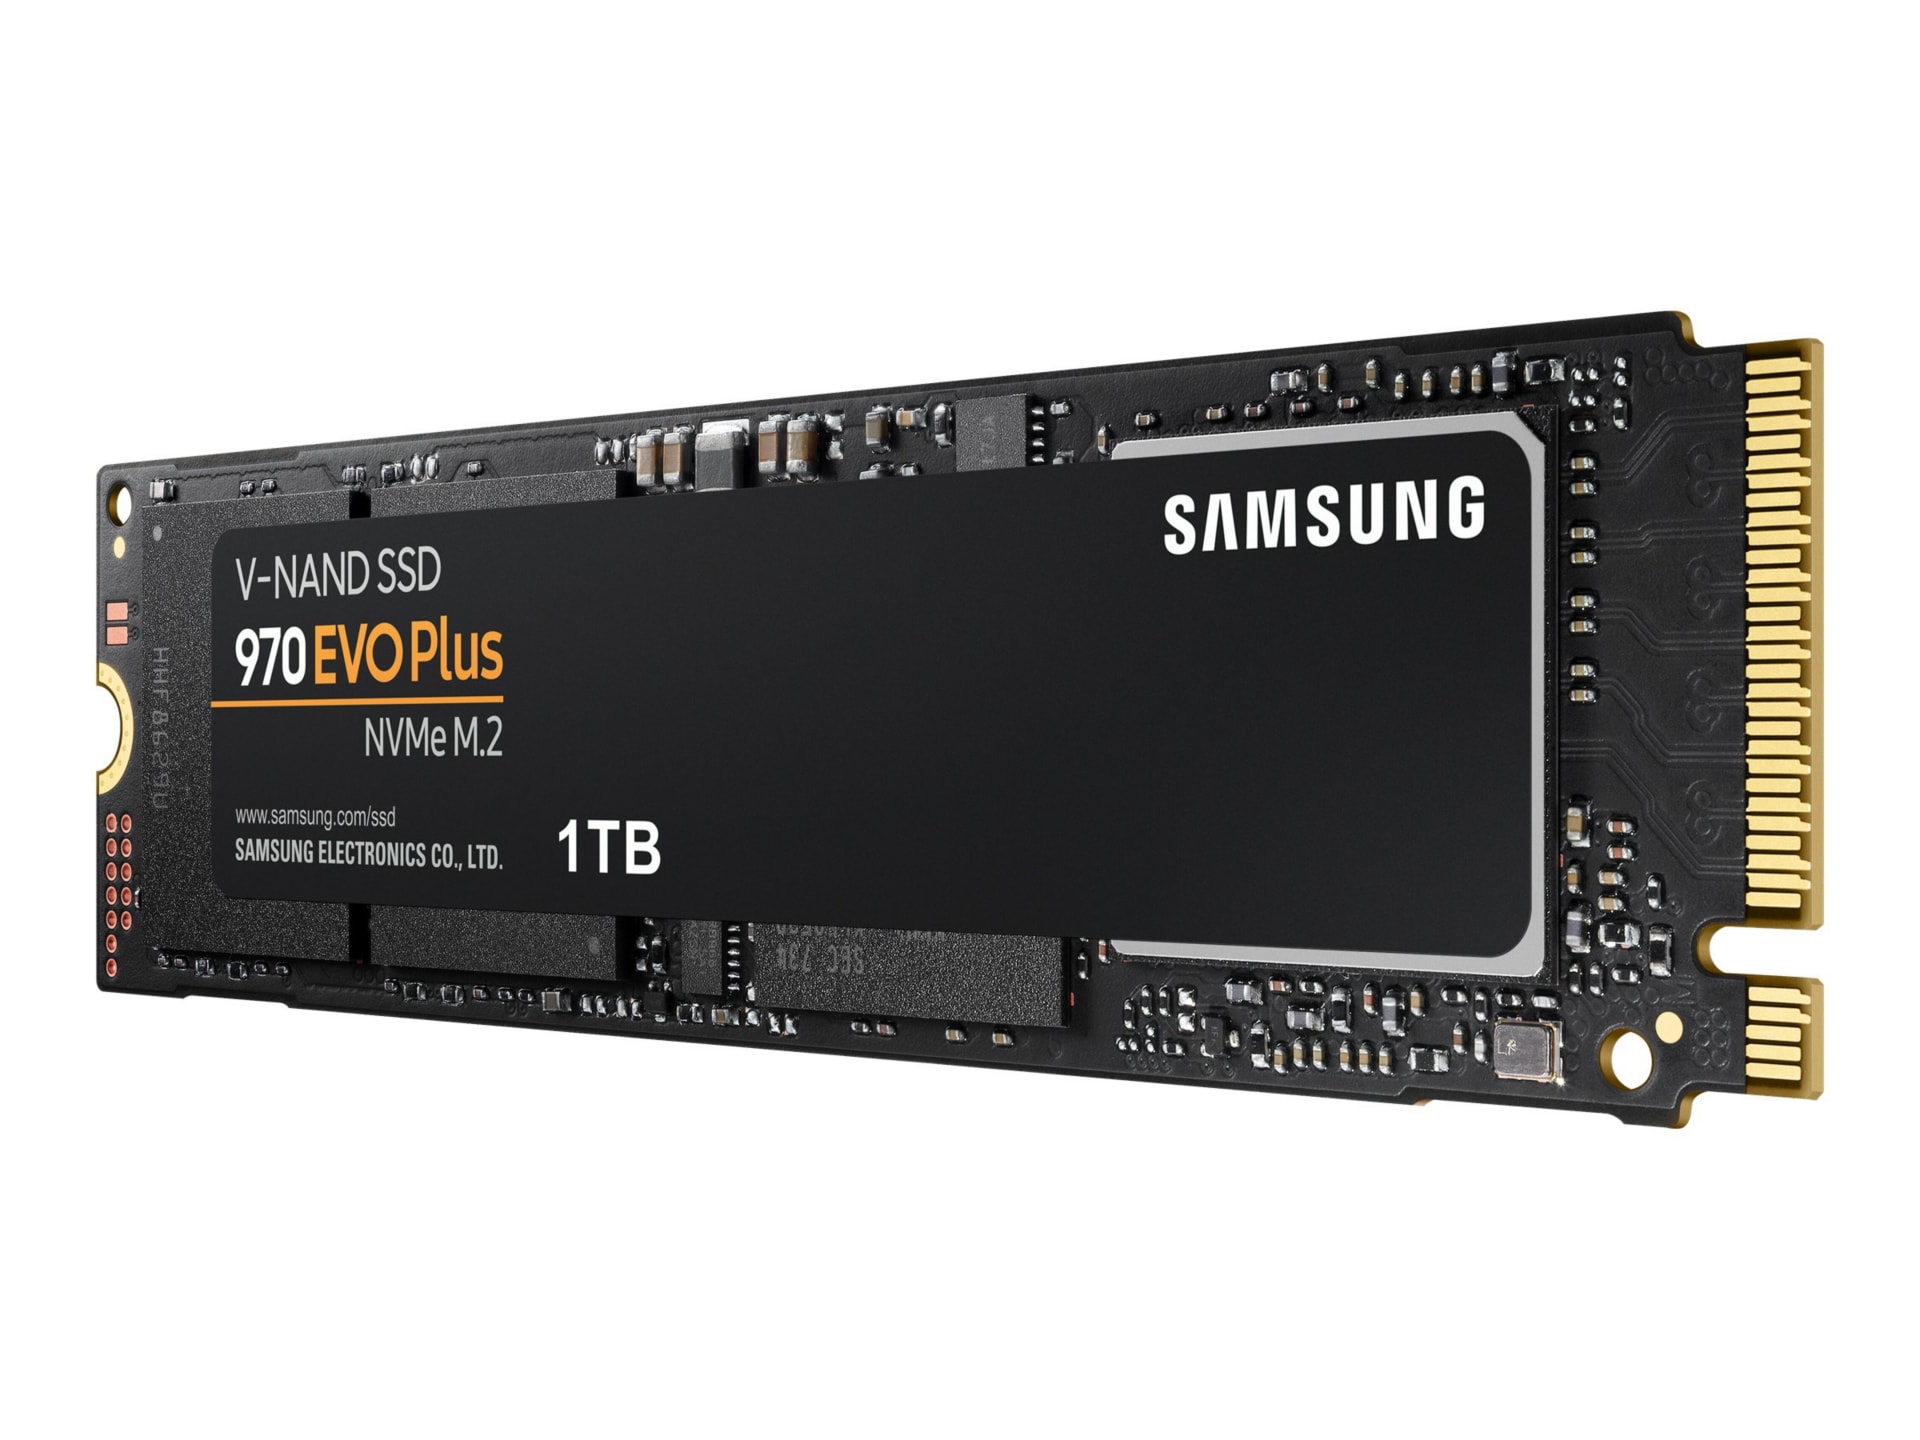 Samsung 970 Plus 1TB PCIe NVMe M.2 State Drive - MZ-V7S1T0B/AM - -